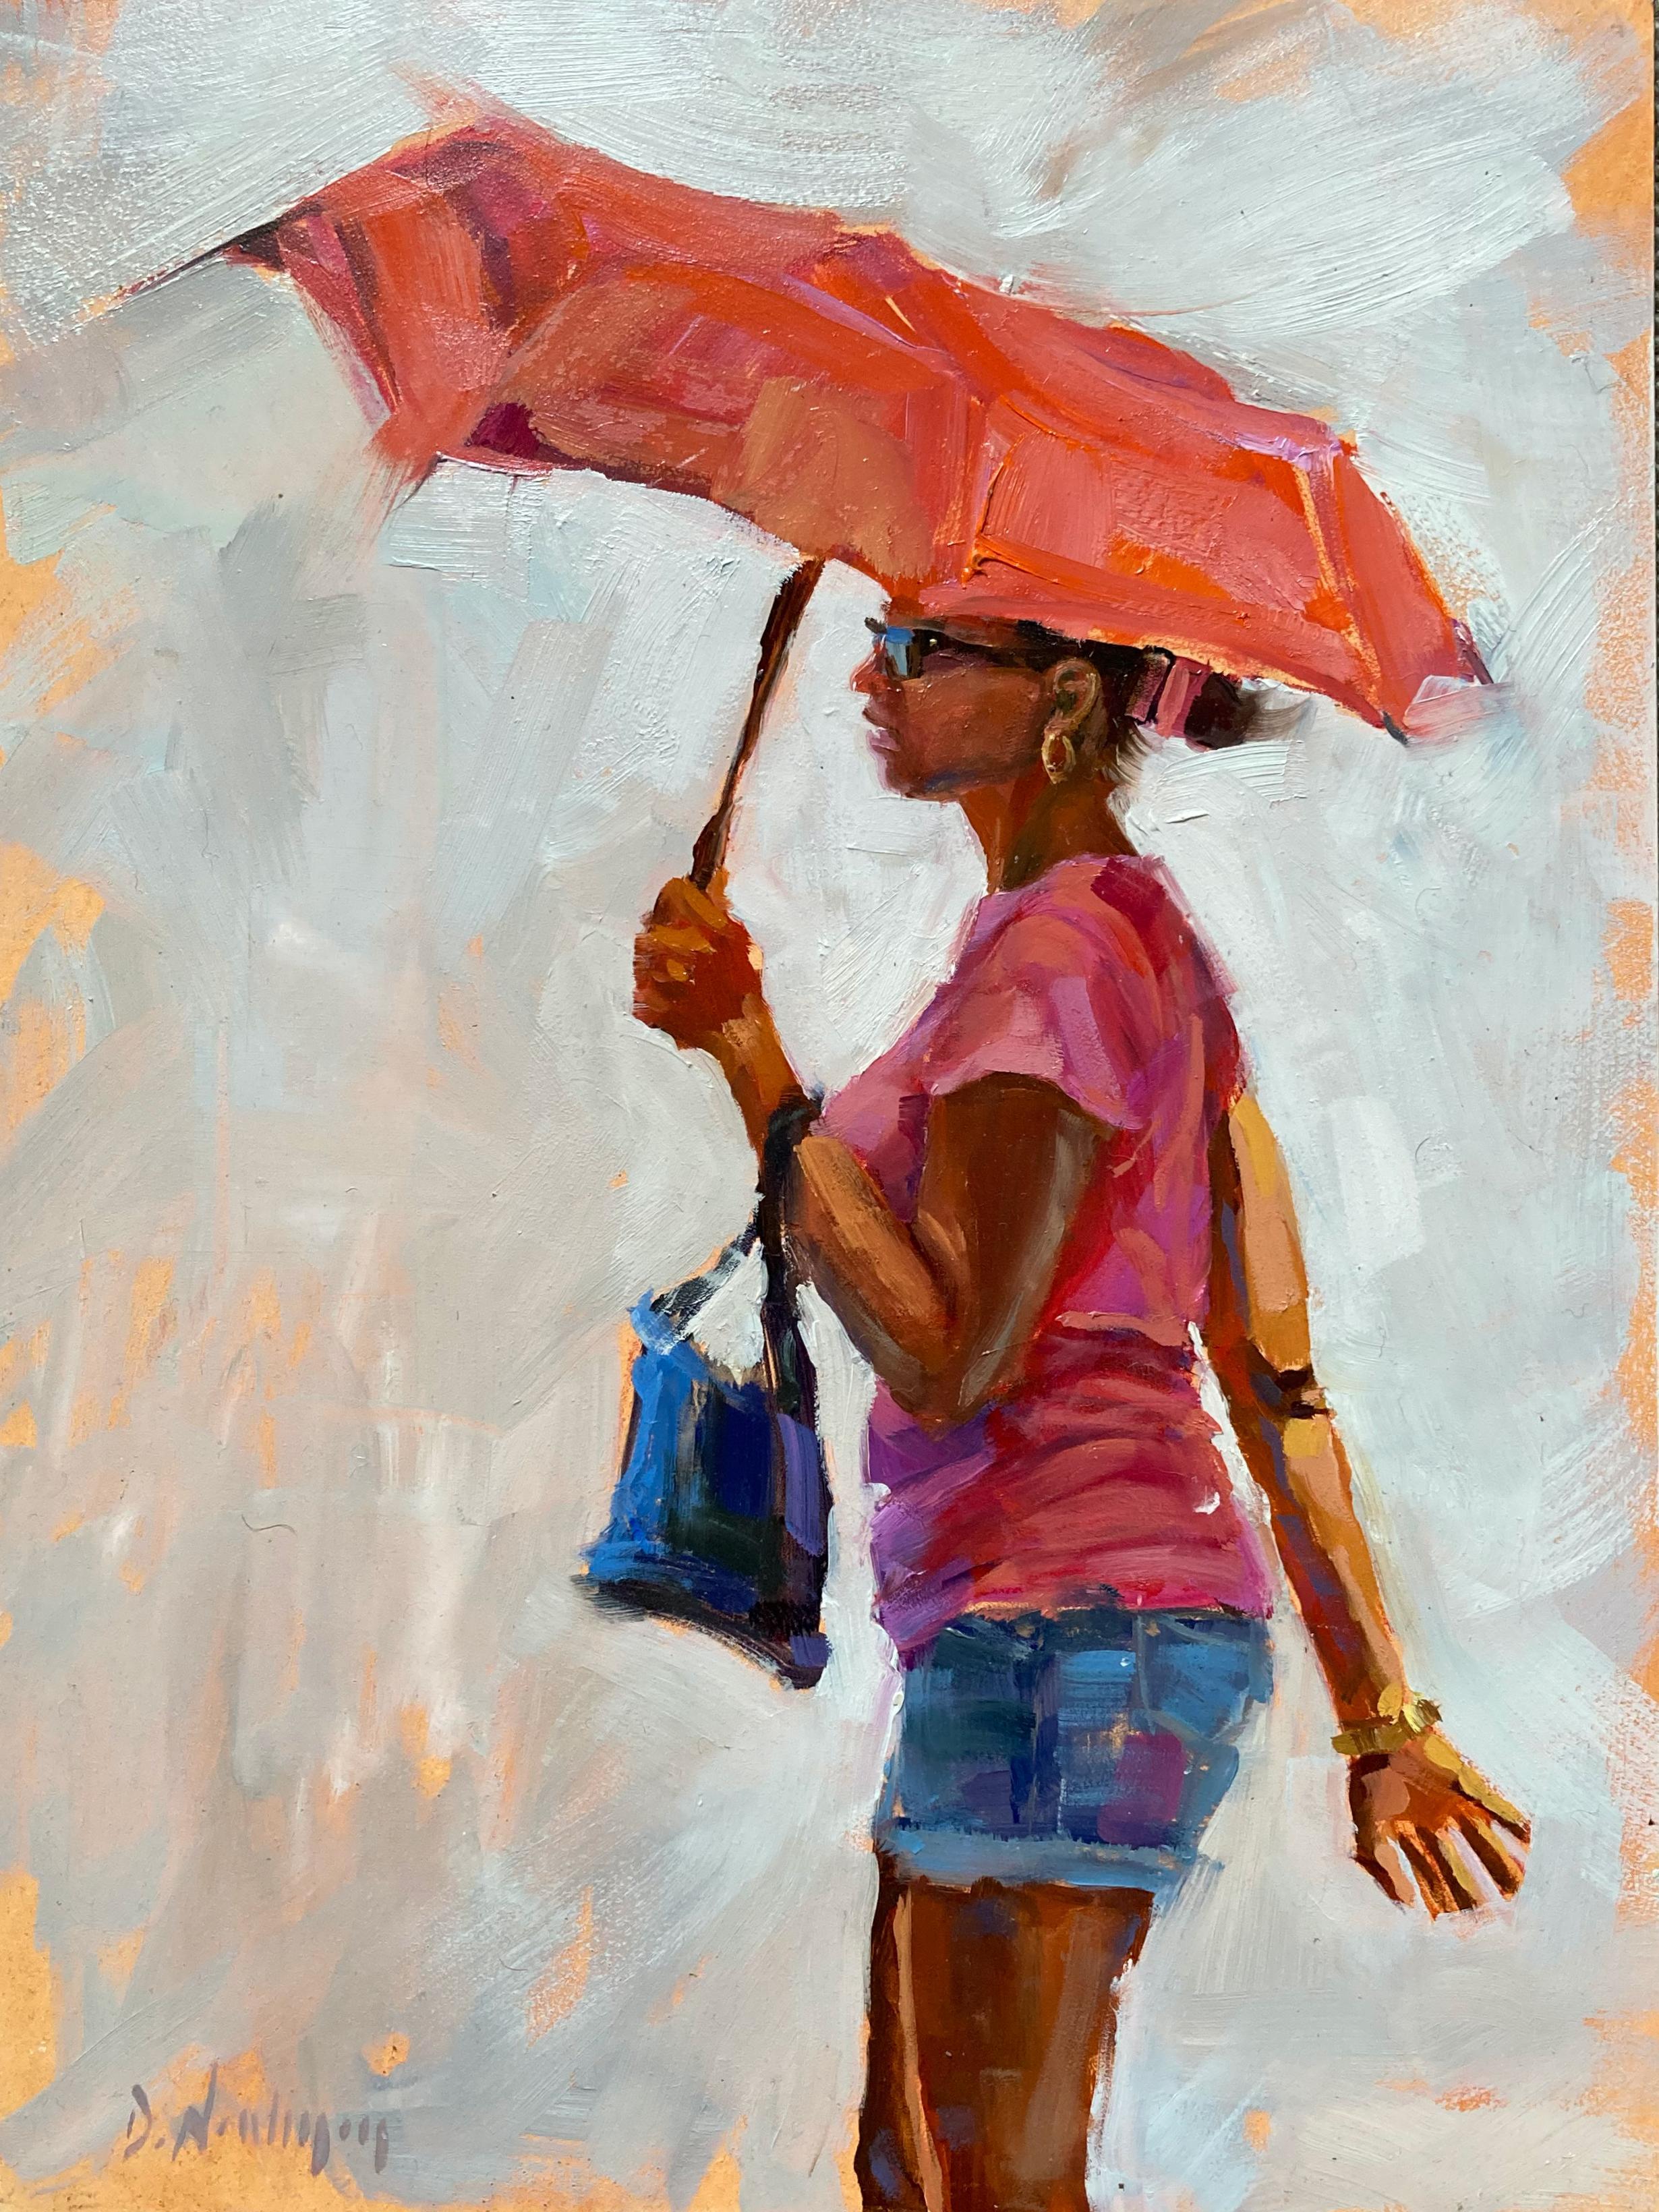 Deborah Newman Figurative Painting - "The Red Umbrella" - Contemporary Impressionist Woman Portrait